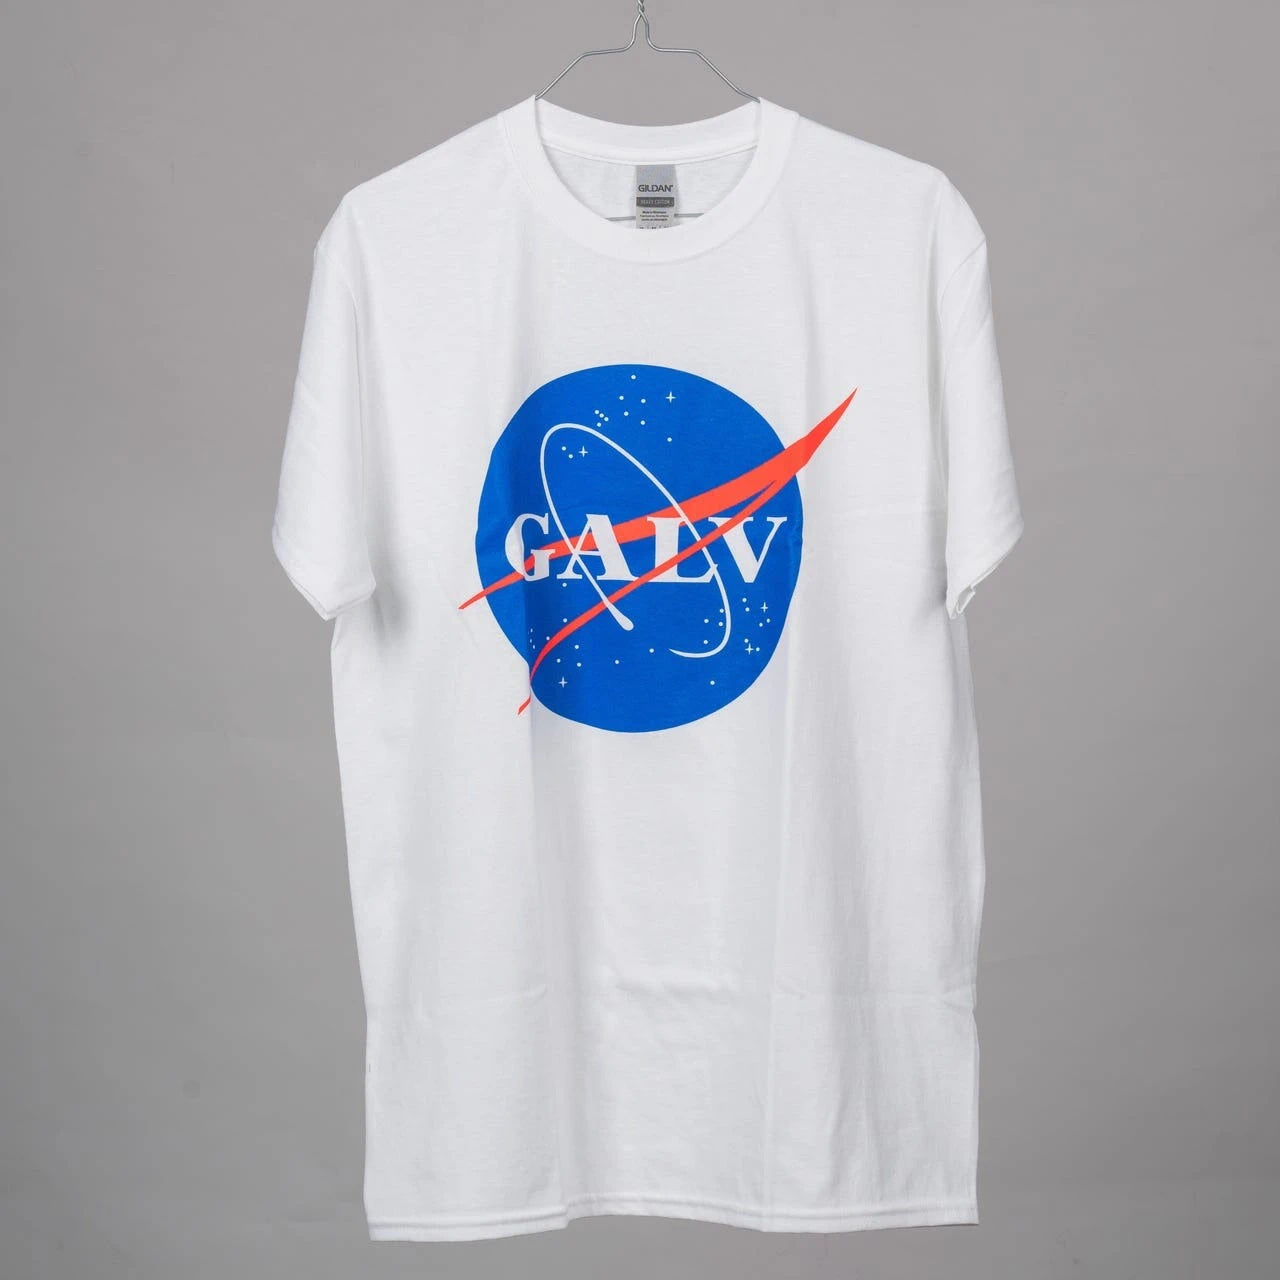 Space Shirt